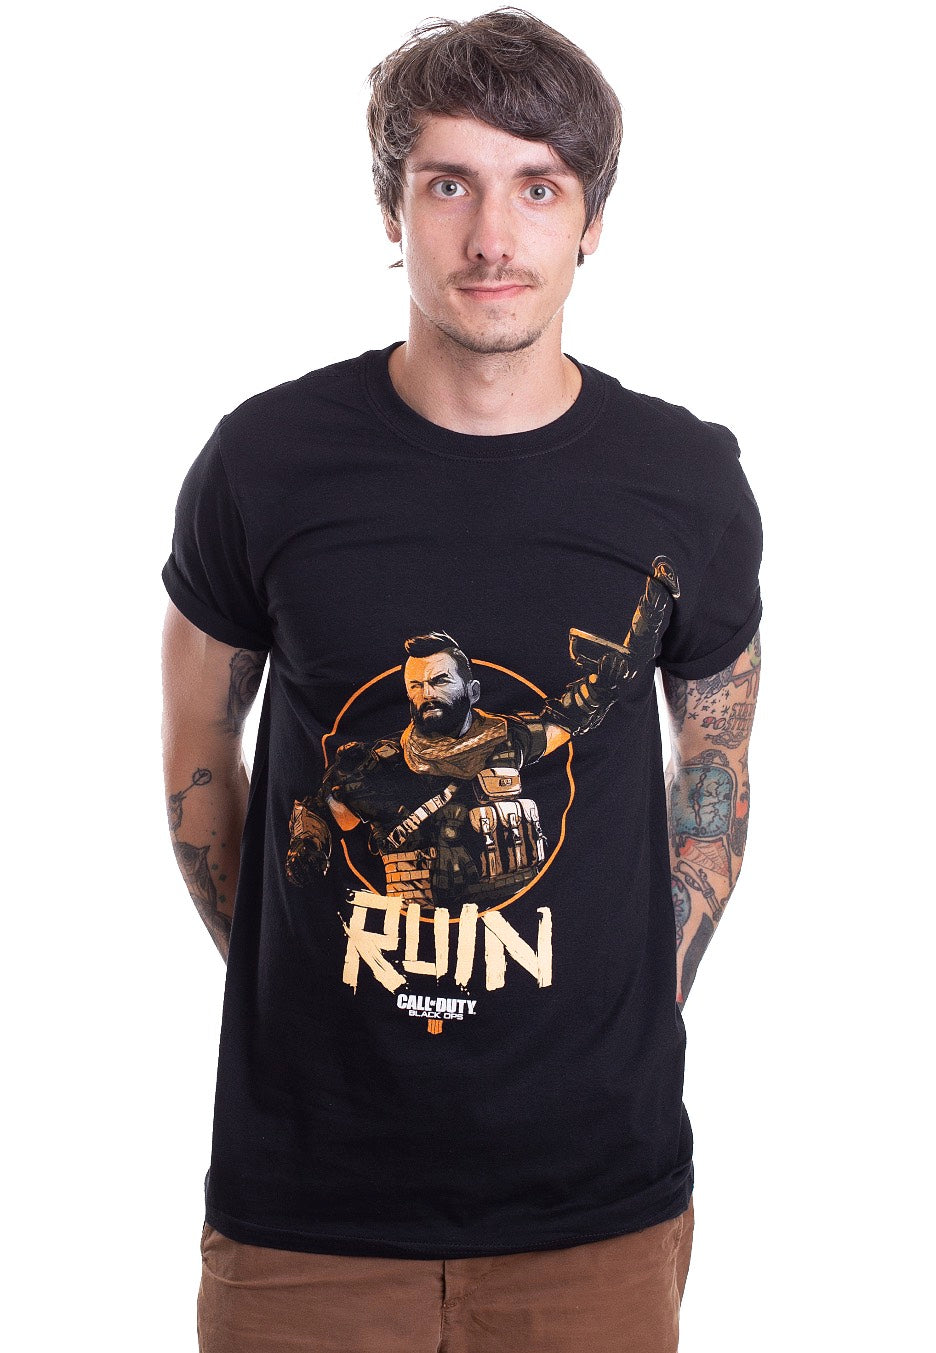 Call Of Duty - Ruin Jump - T-Shirt | Men-Image